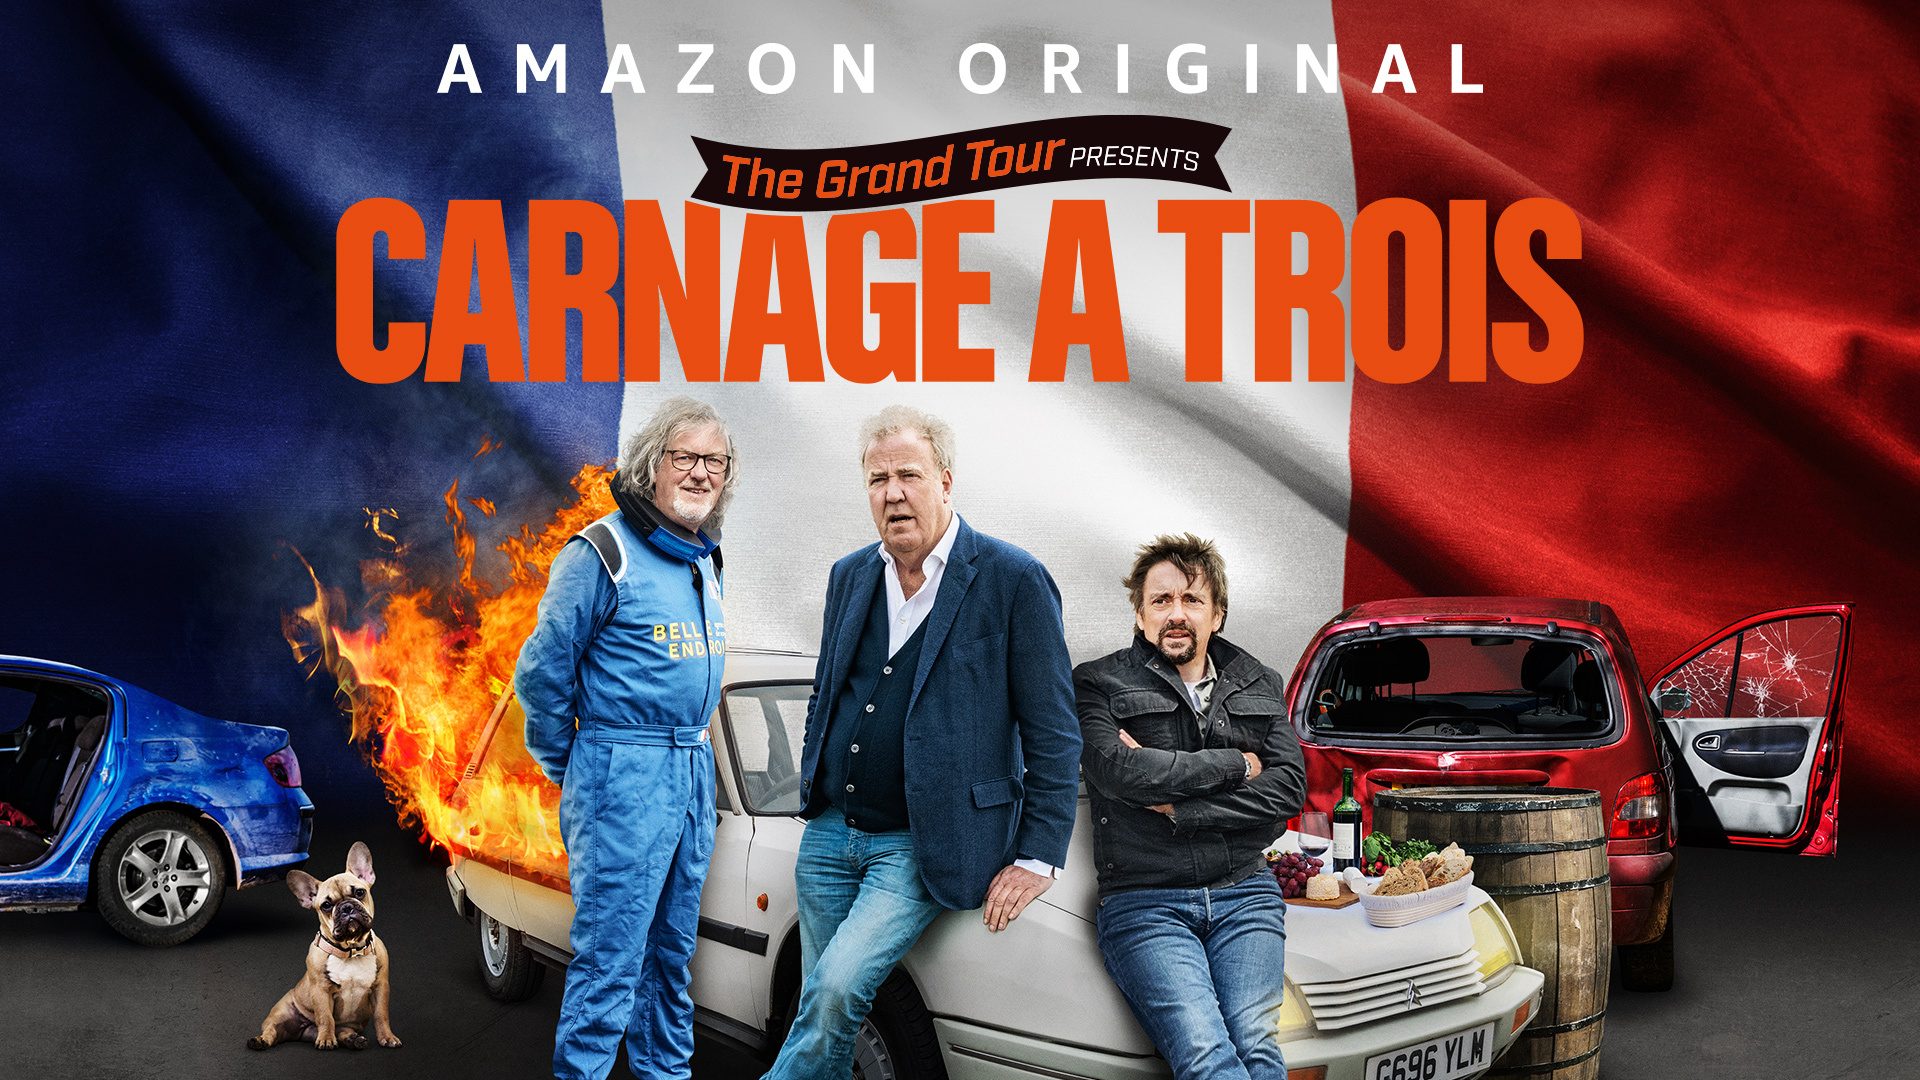 The Grand Tour Presents: Carnage A Trois Amazon